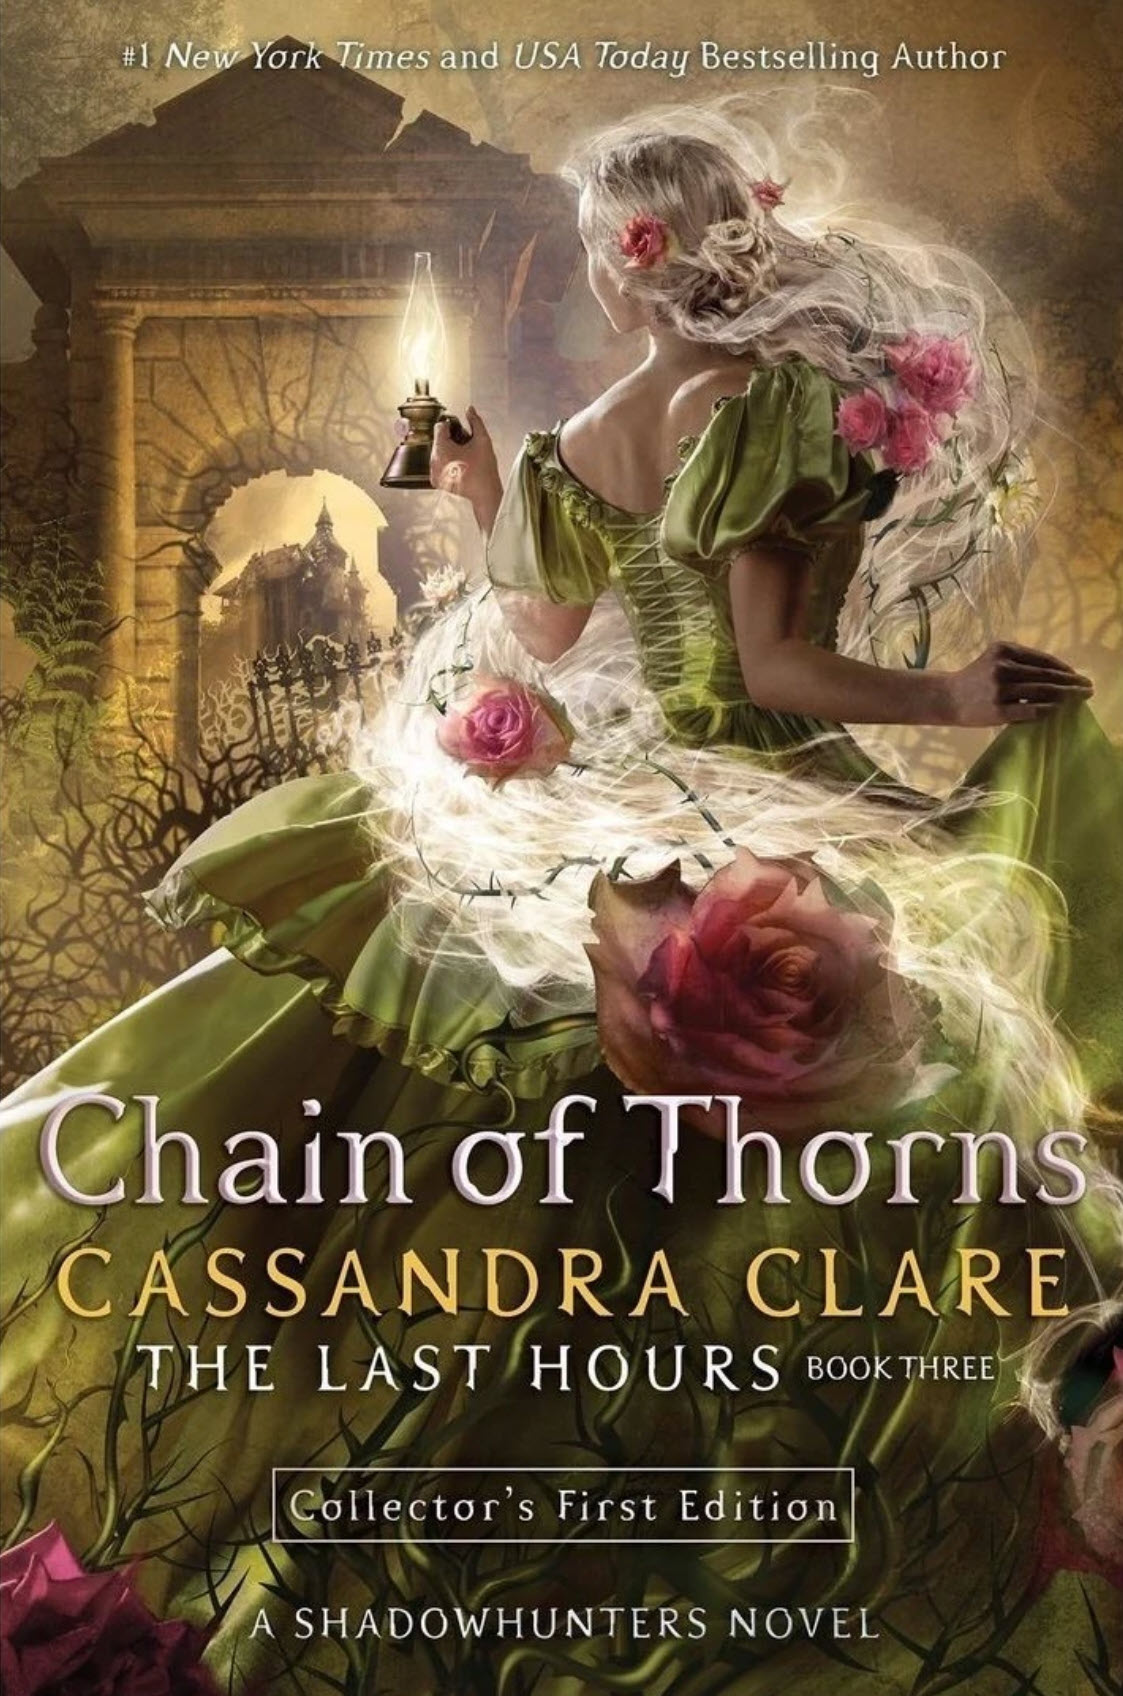 The Bane Chronicles - Cassandra Clare